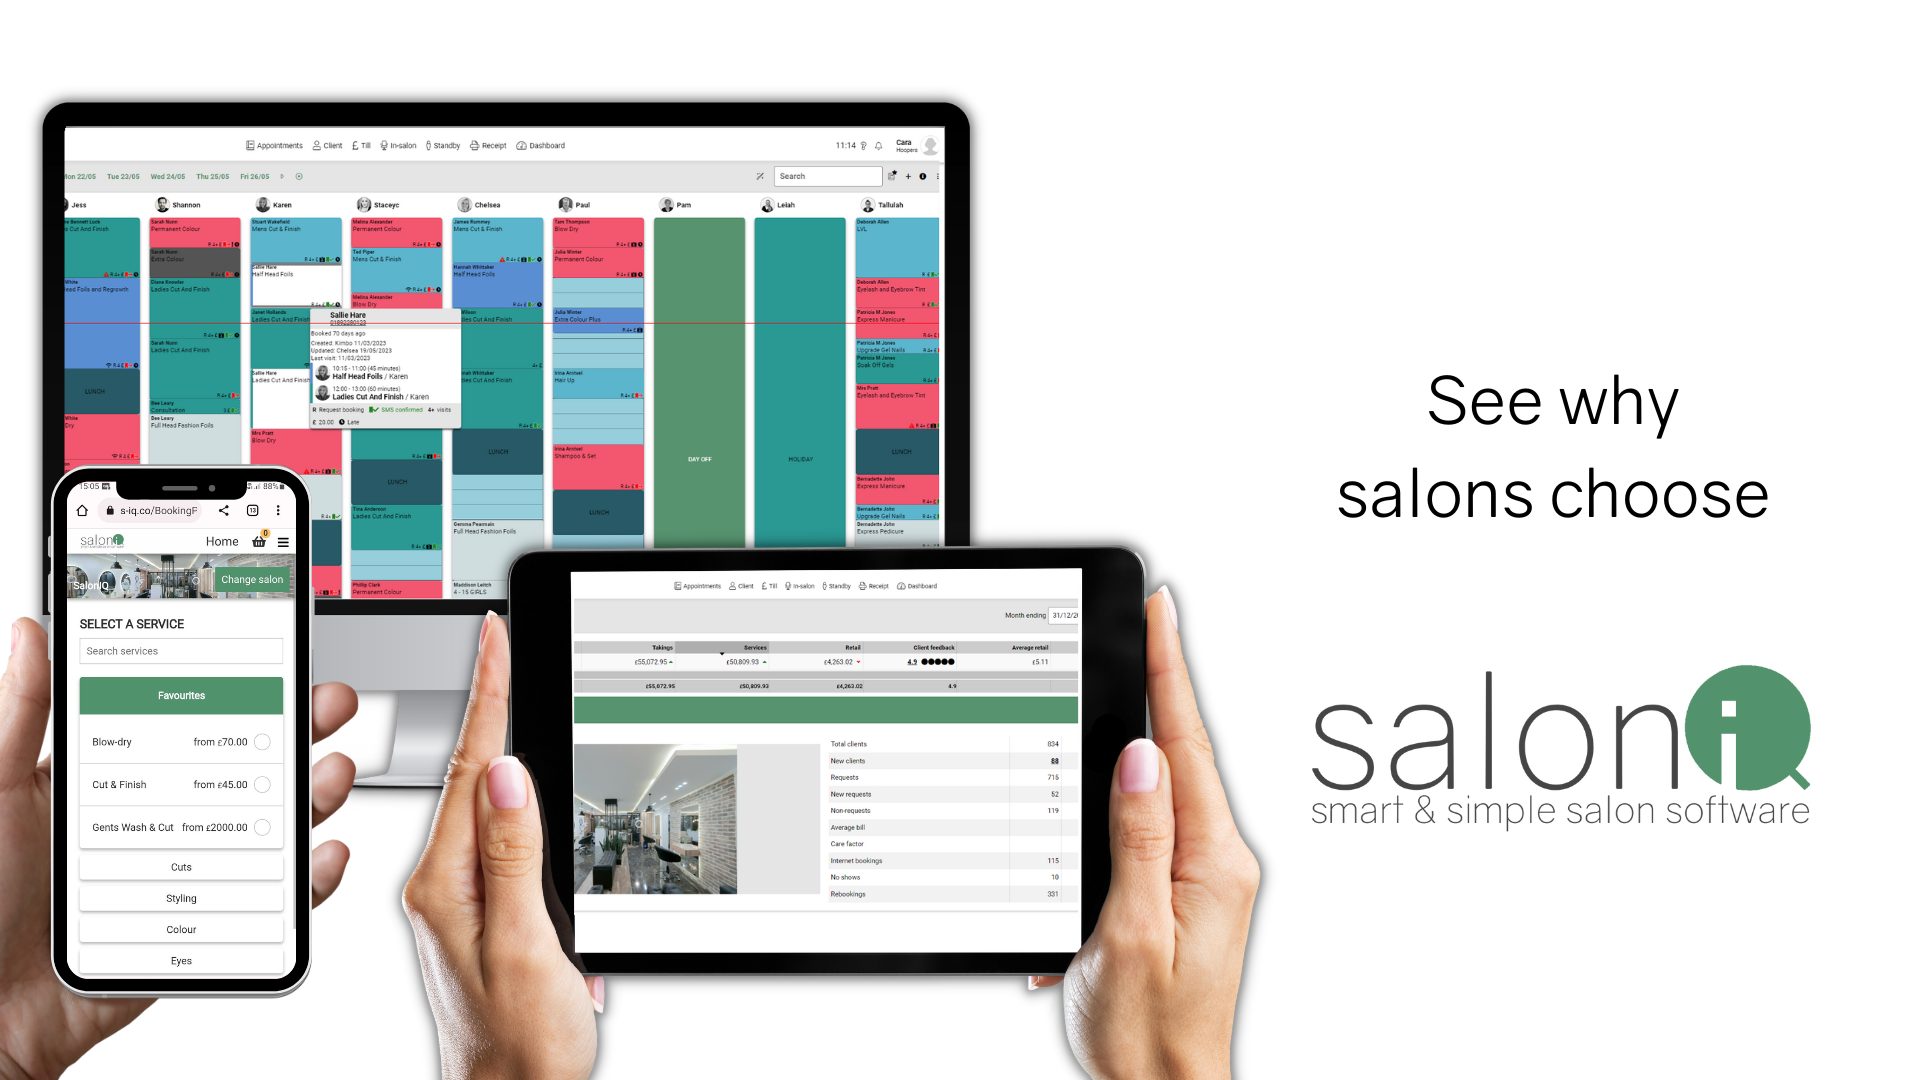 Copy of Why salons choose SalonIQ video slides